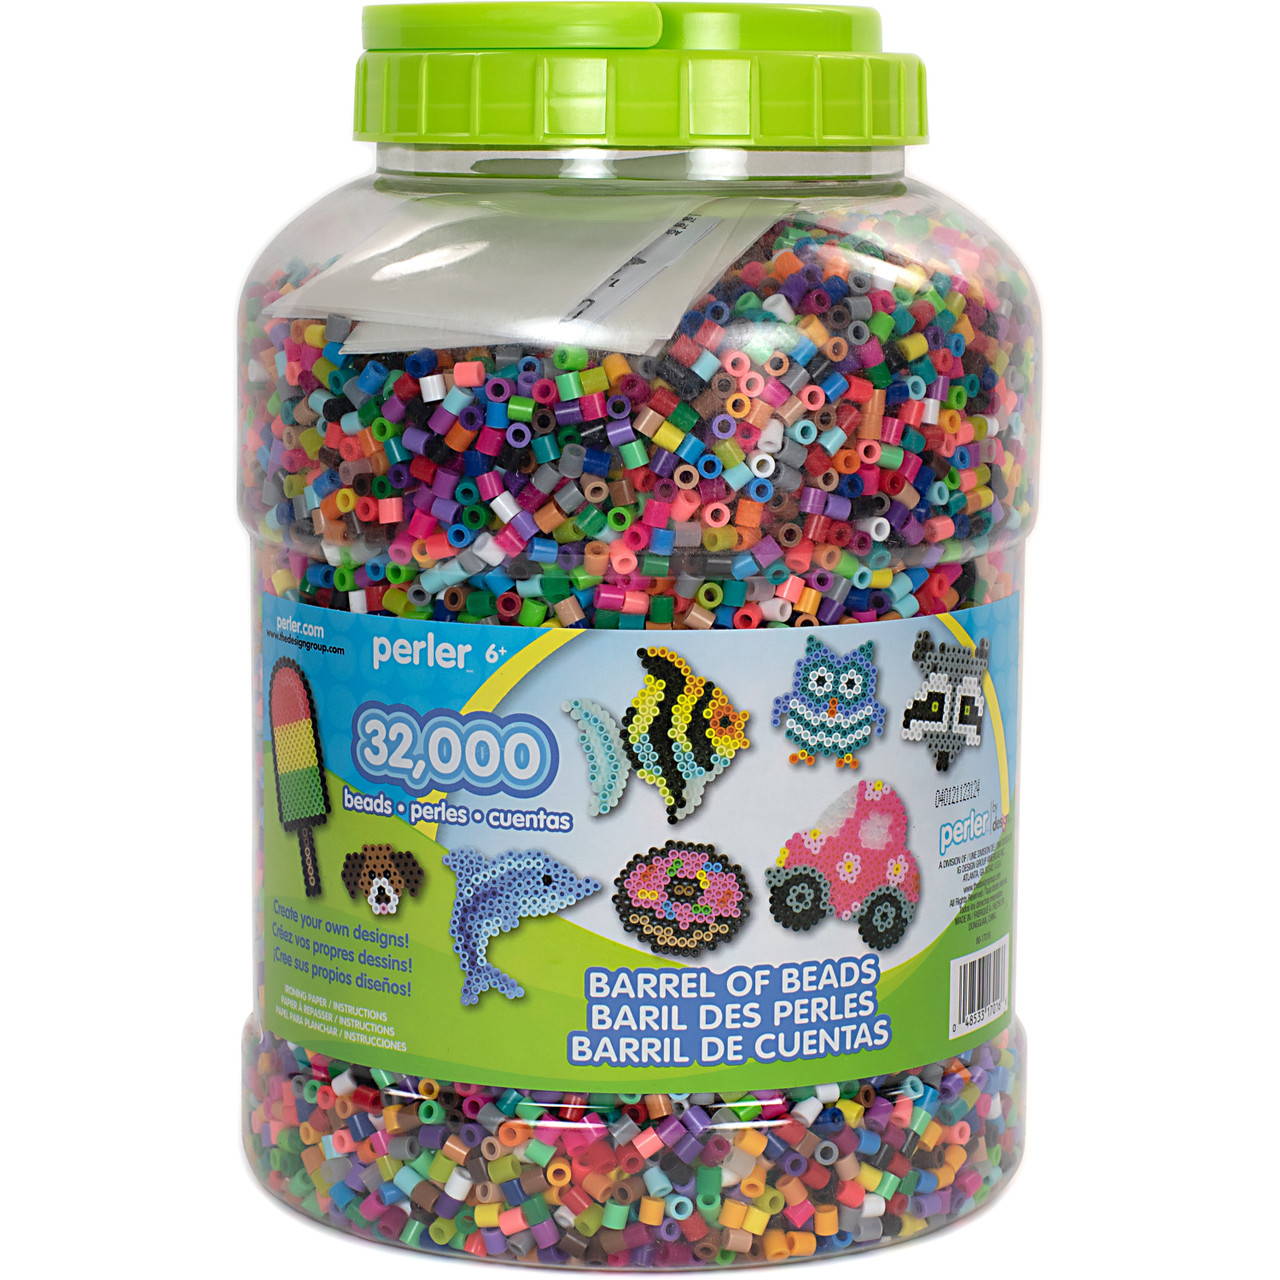 32,000 Barrel of Beads